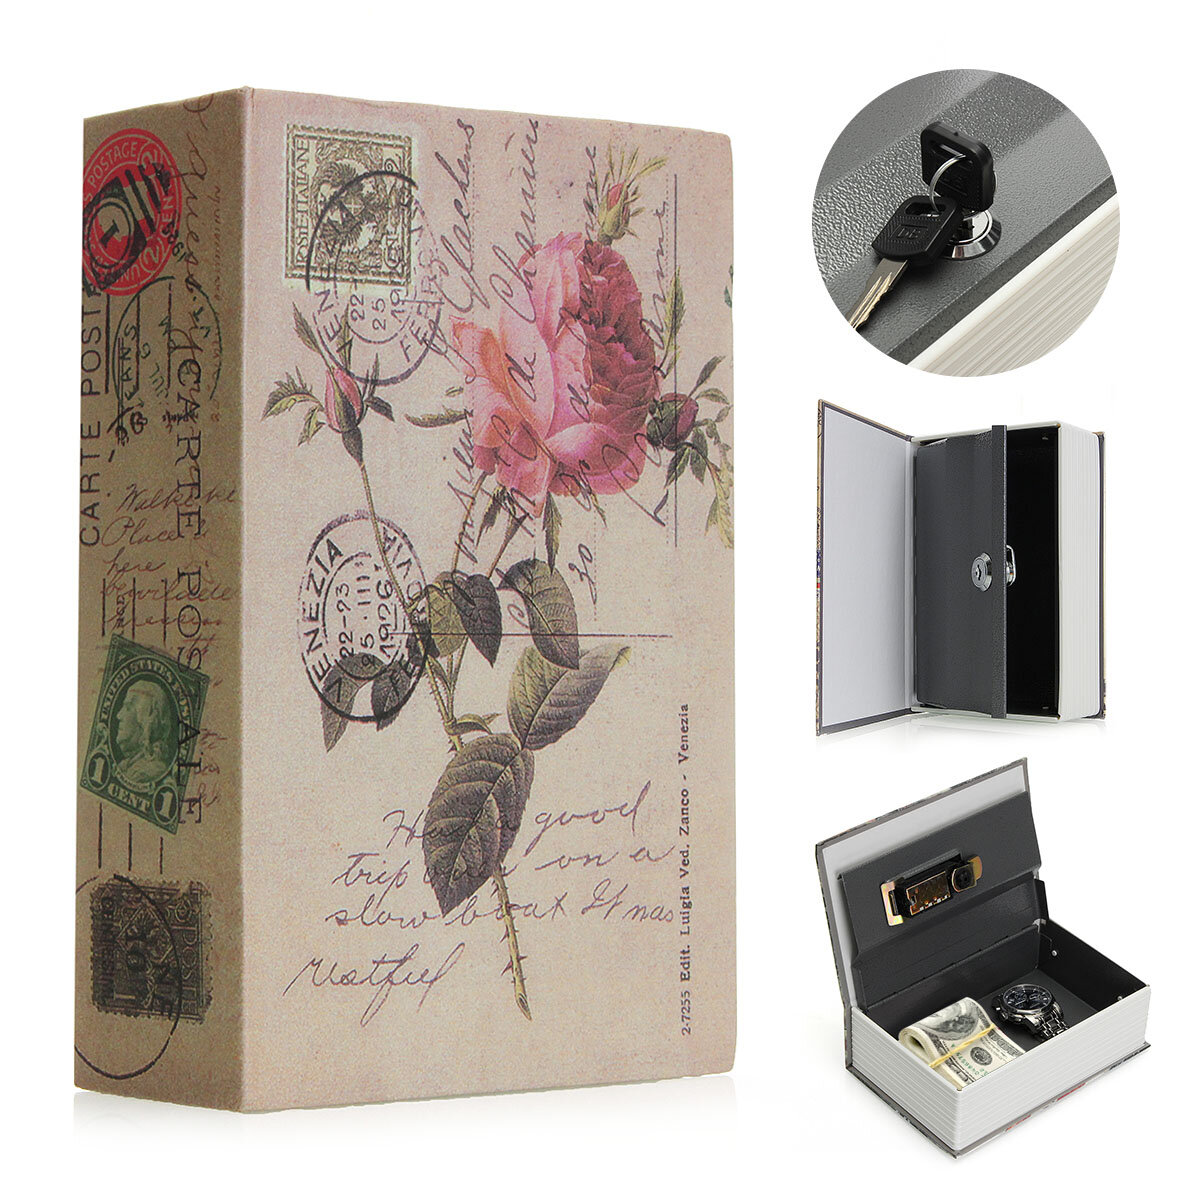 Mini Home Hidden Dictionary Book Safe Cash Sieraden Storage Key Lock Security Box Speciale geschenke